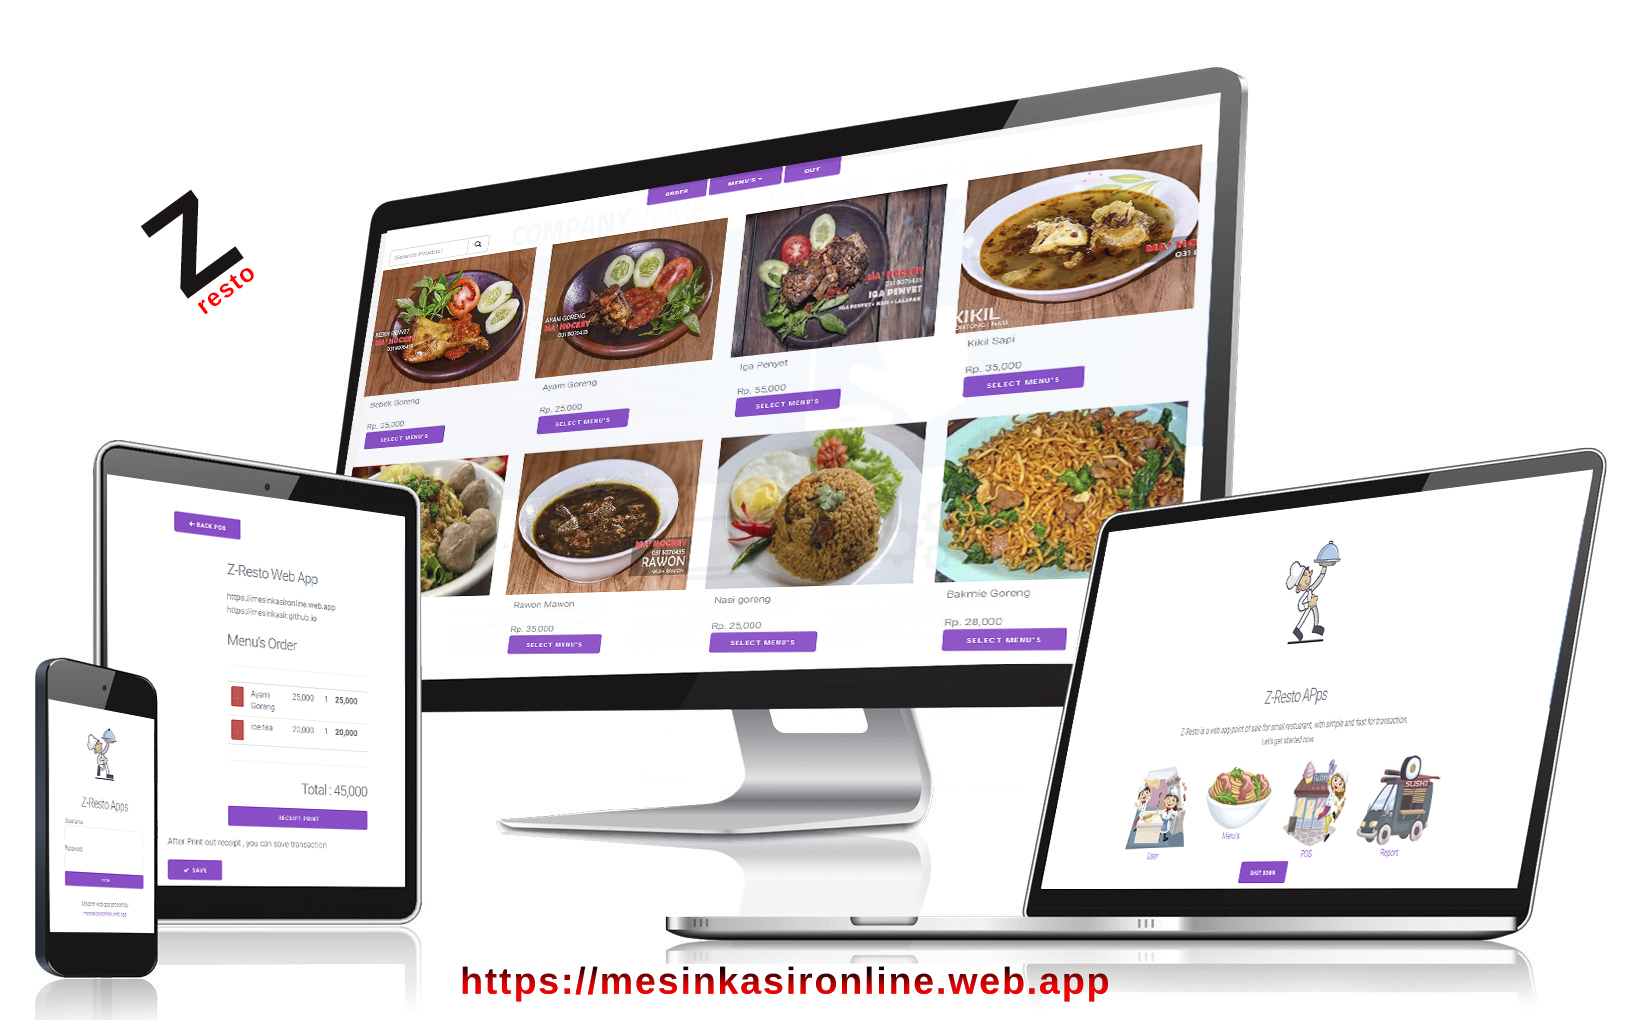 Software restoran,program restoran,aplikasi restoran z-resto pos apps dengan menu penjualan pos bergambar dan harga murah